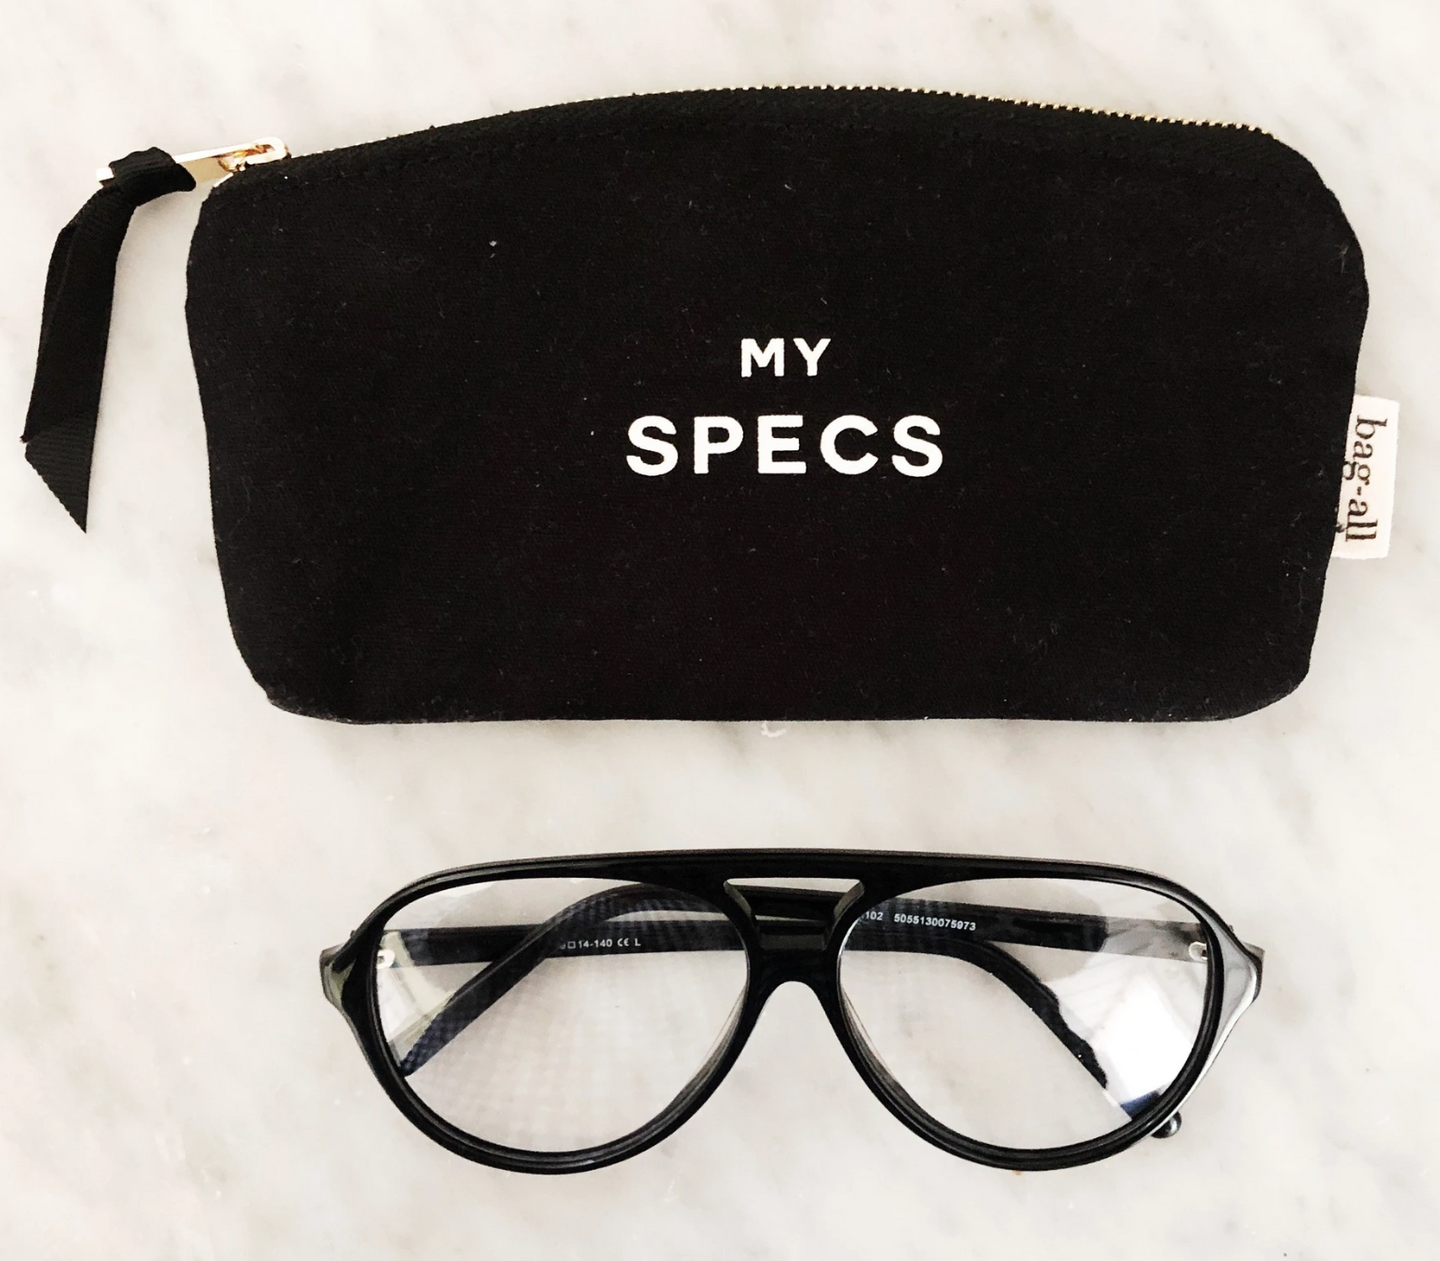 Specs Glasses Case Black